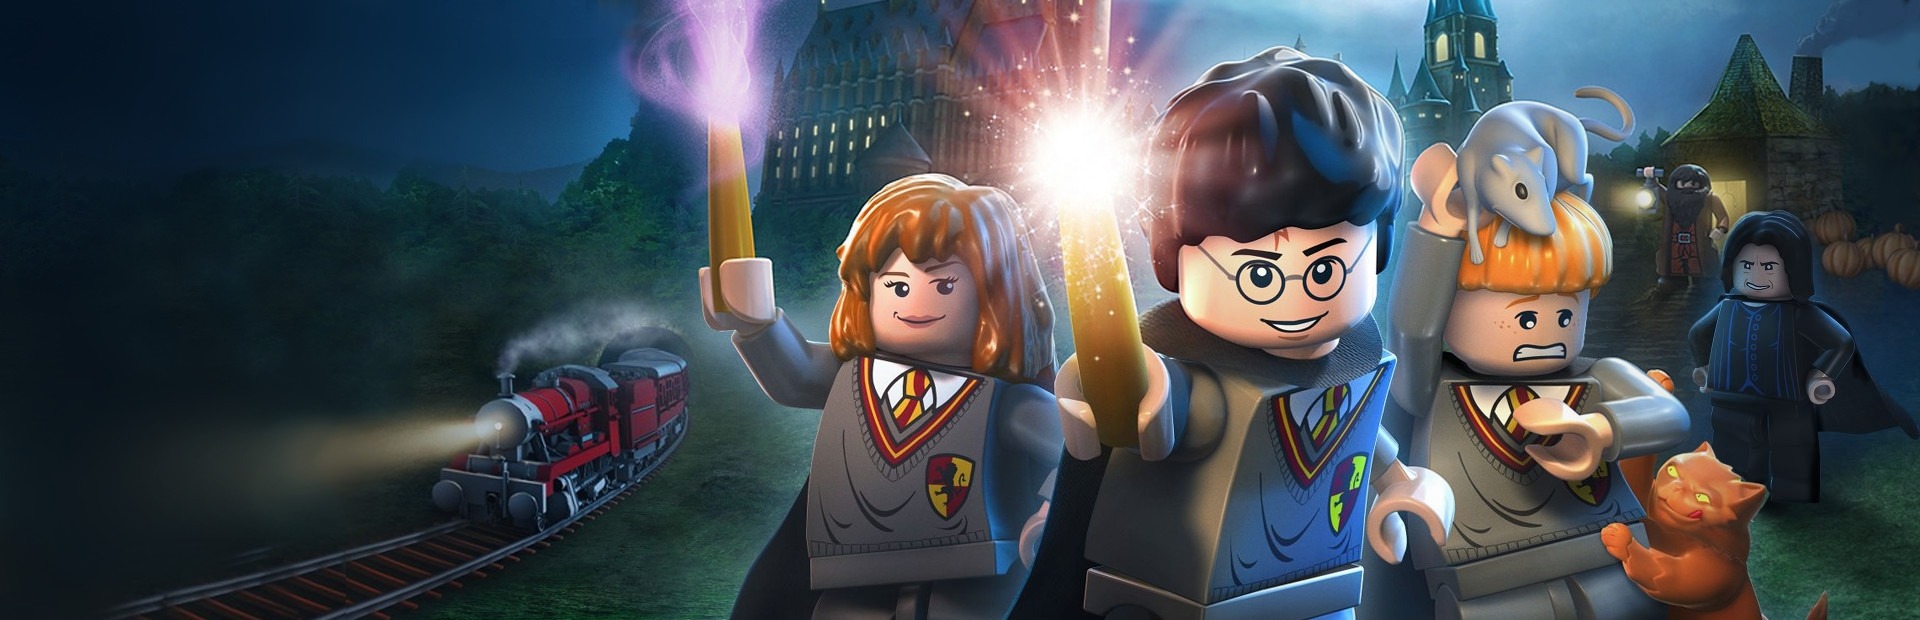 LEGO Harry Potter: Years 1-4